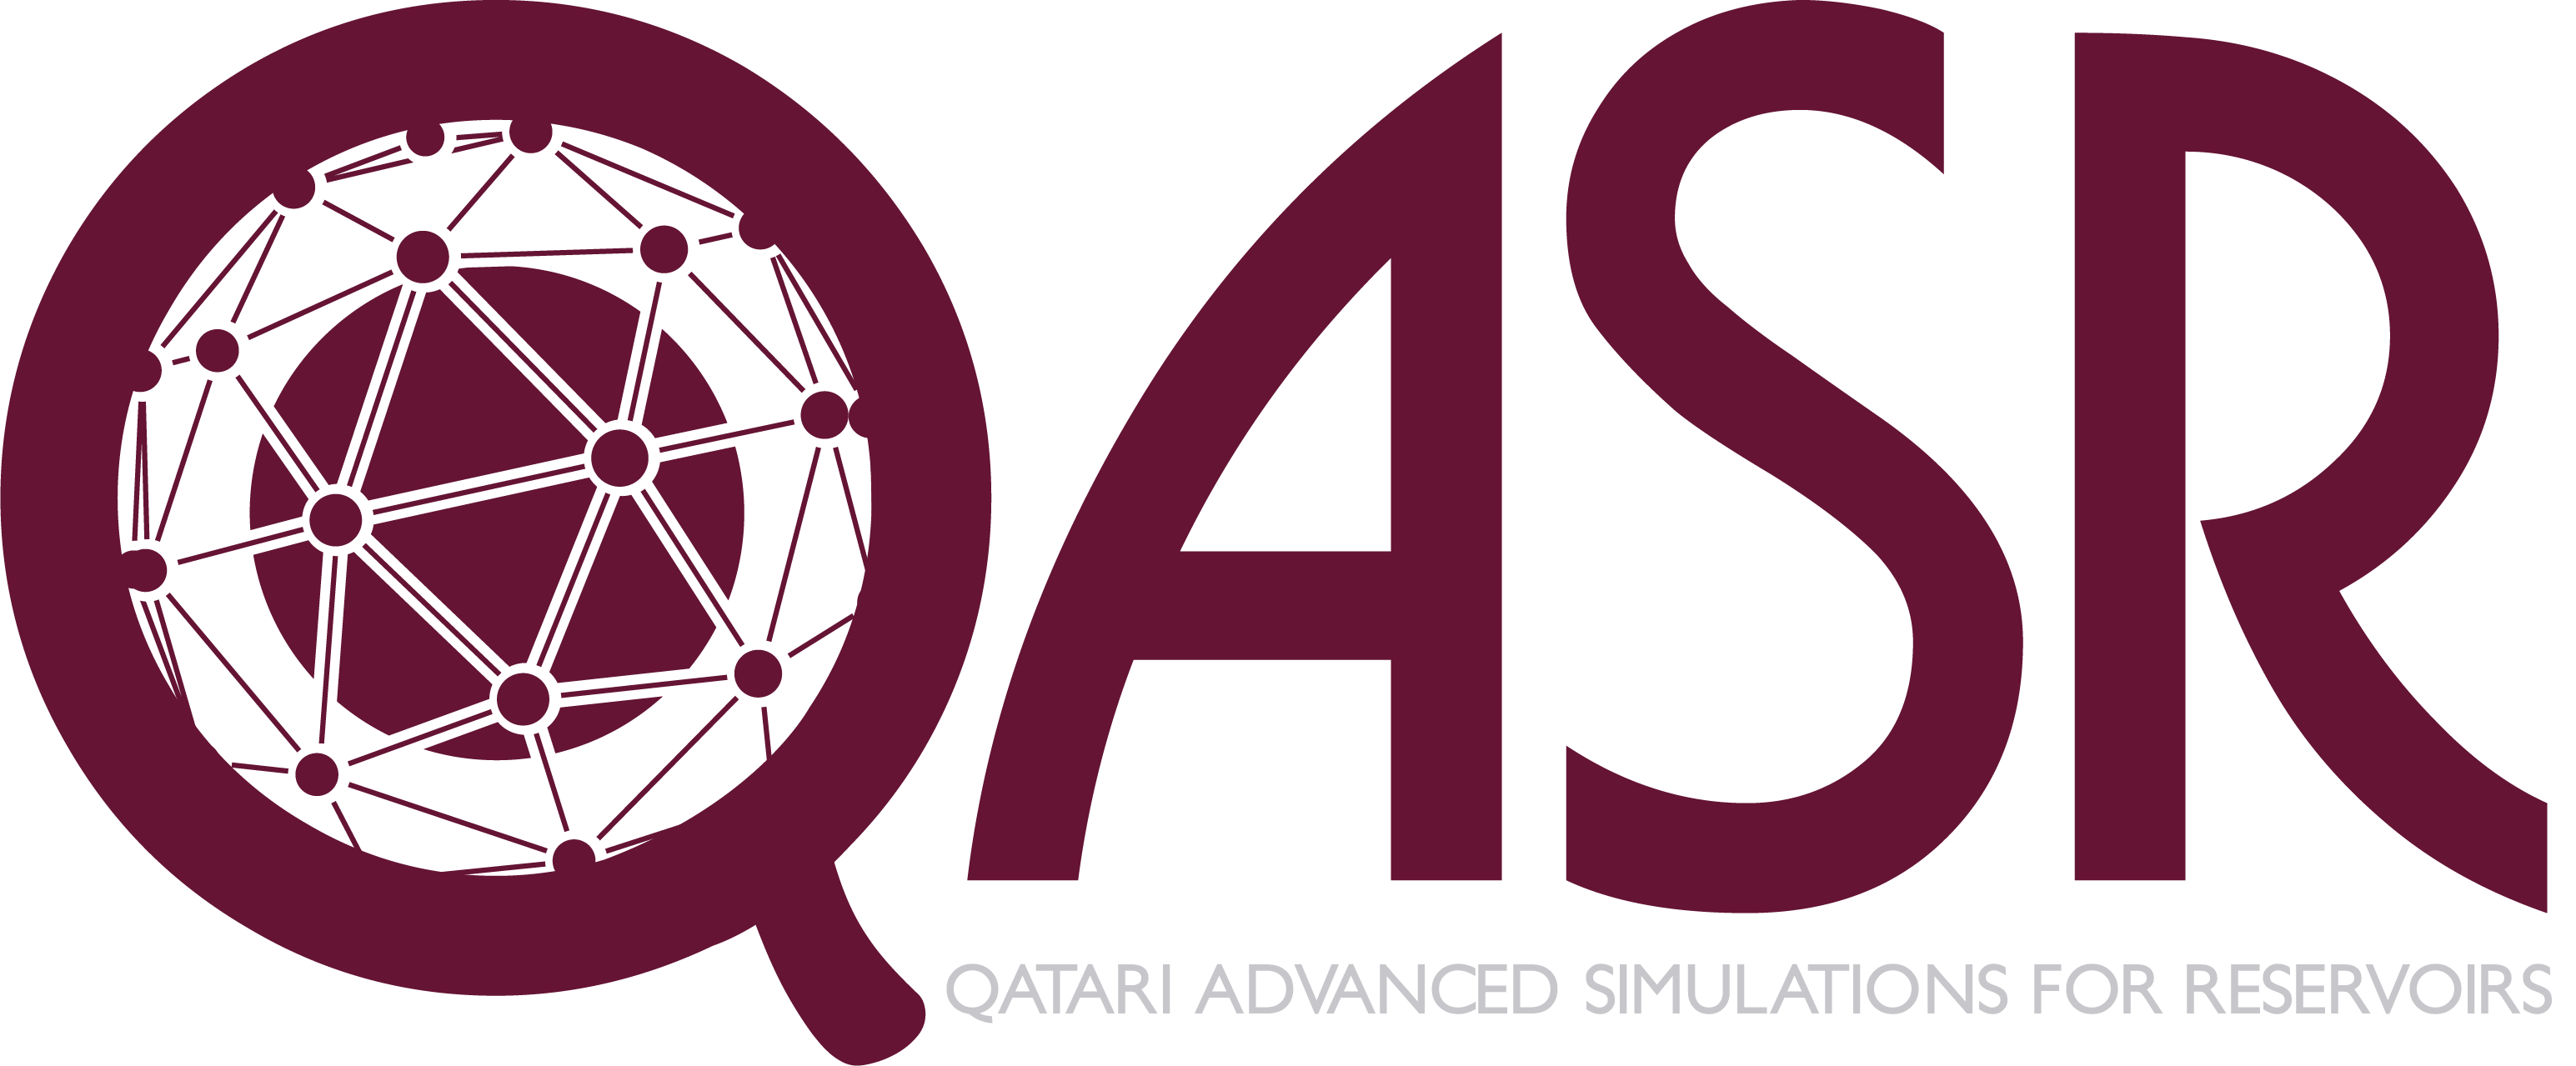 QASR Logo